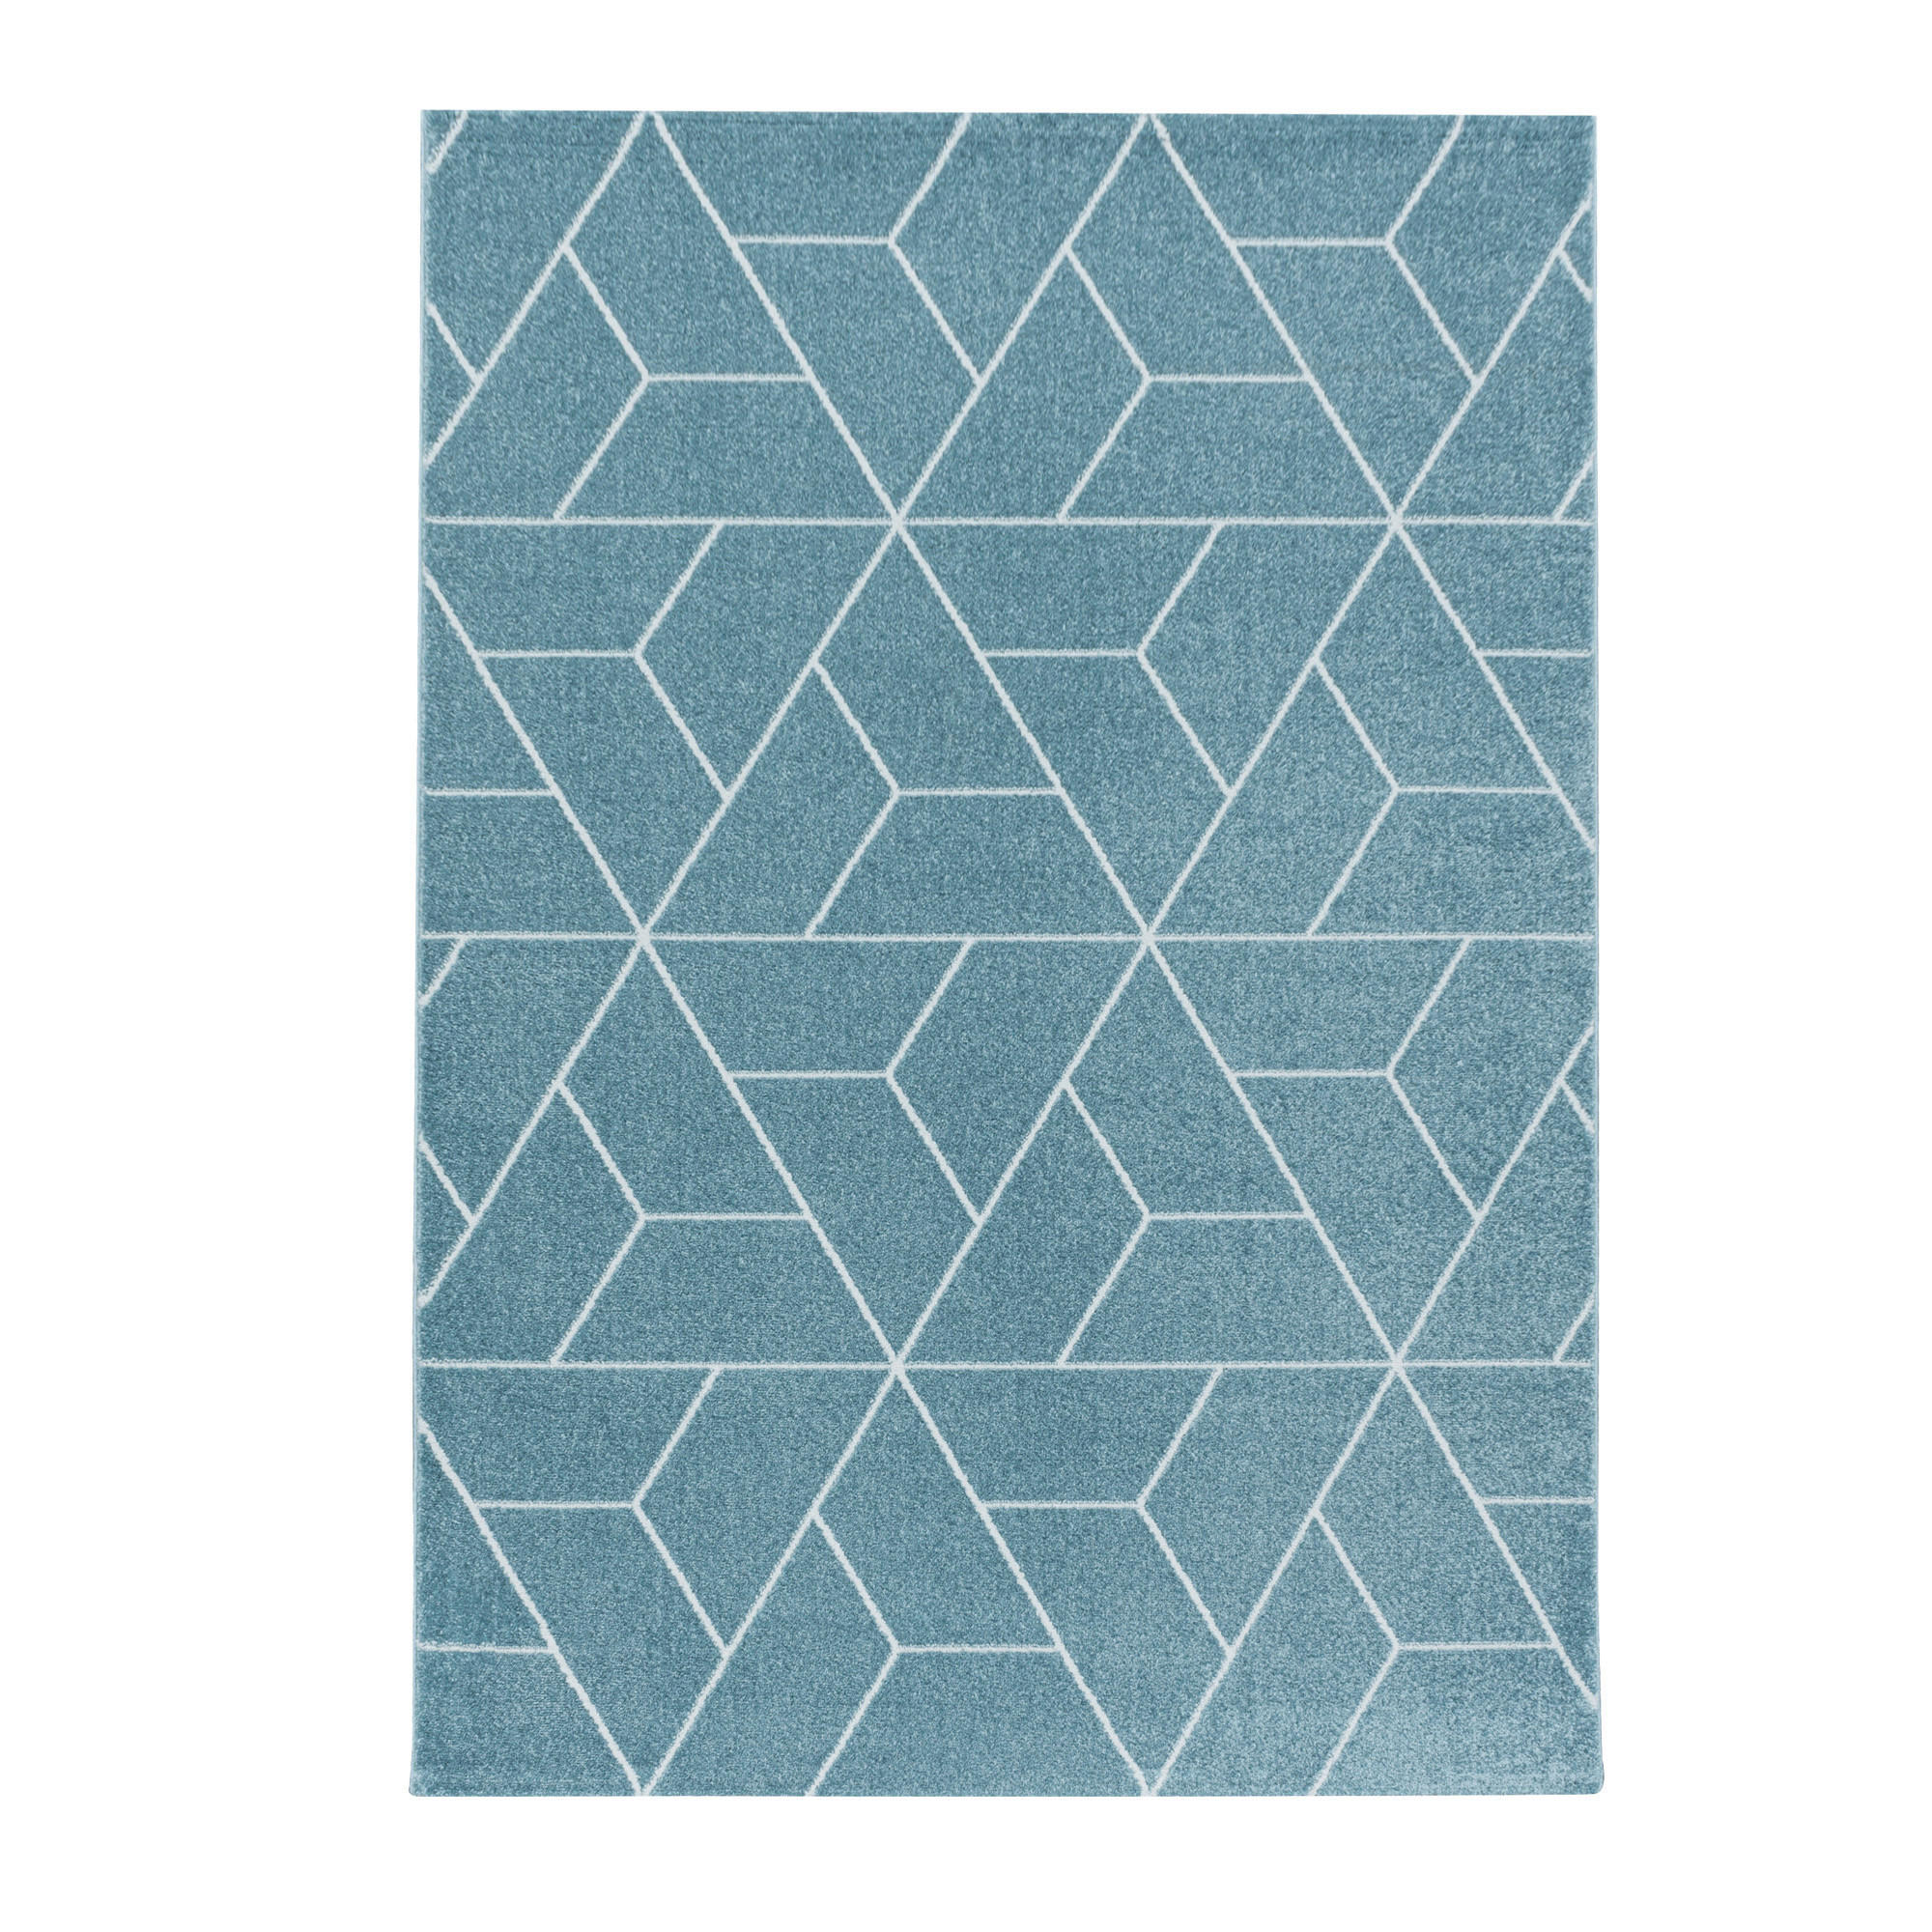 WEBTEPPICH  80/150 cm  Blau   - Blau, Design, Textil (80/150cm) - Novel